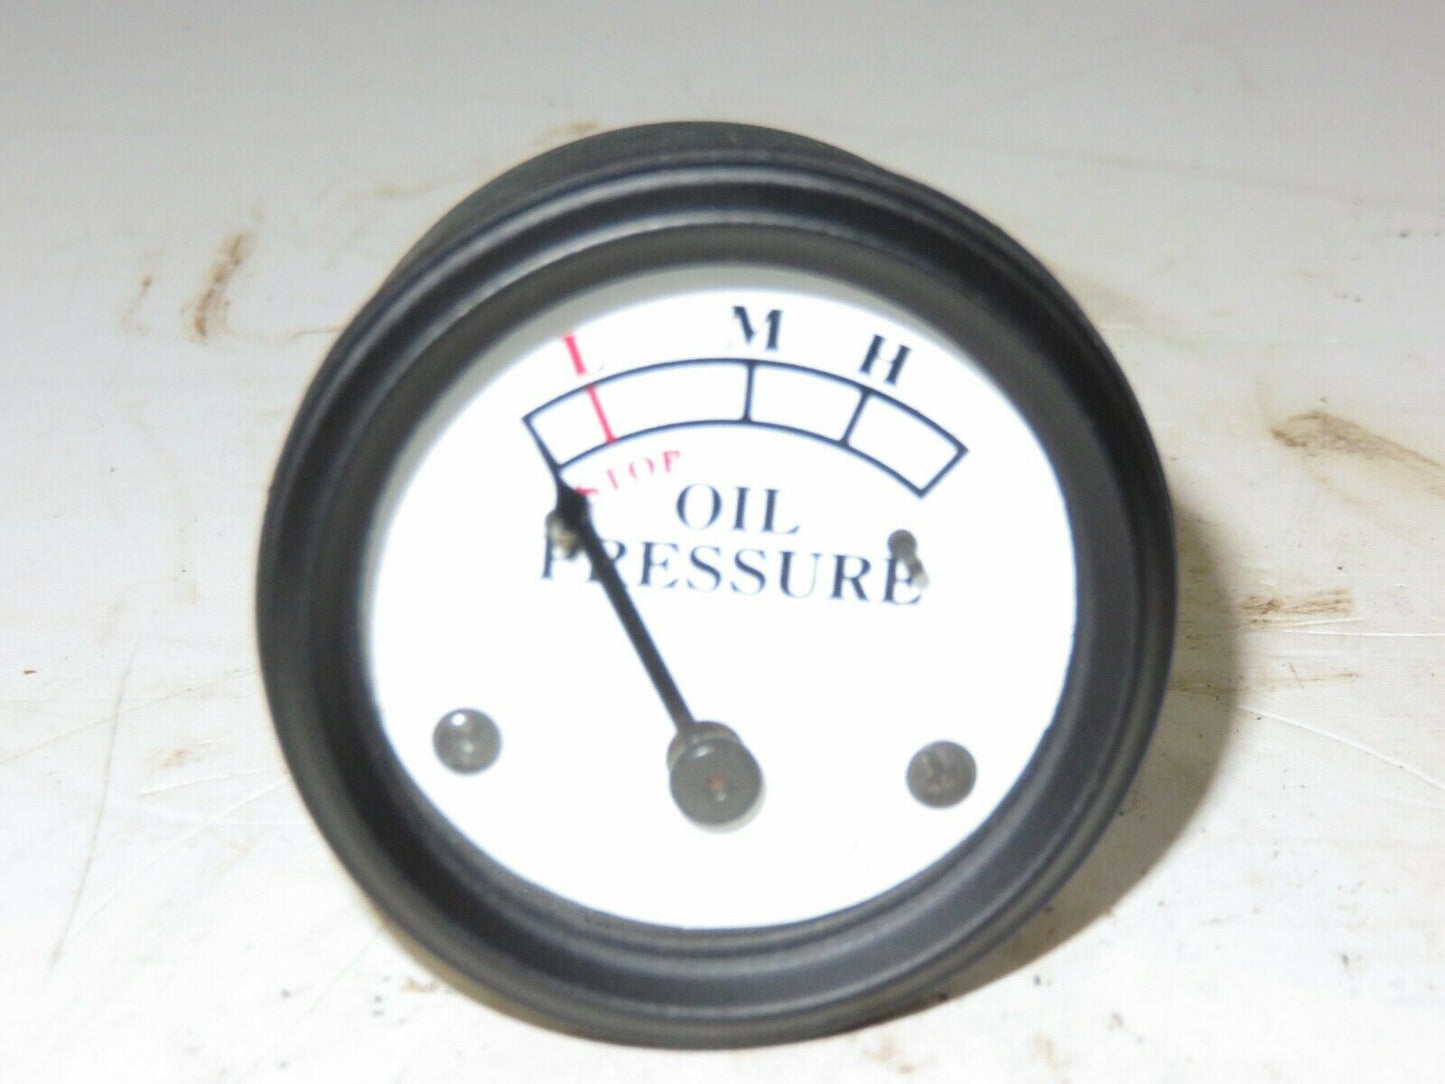 AA1730R NJD420 John Deere Reproduction Oil Pressure Gauge For A, B, D, G, M